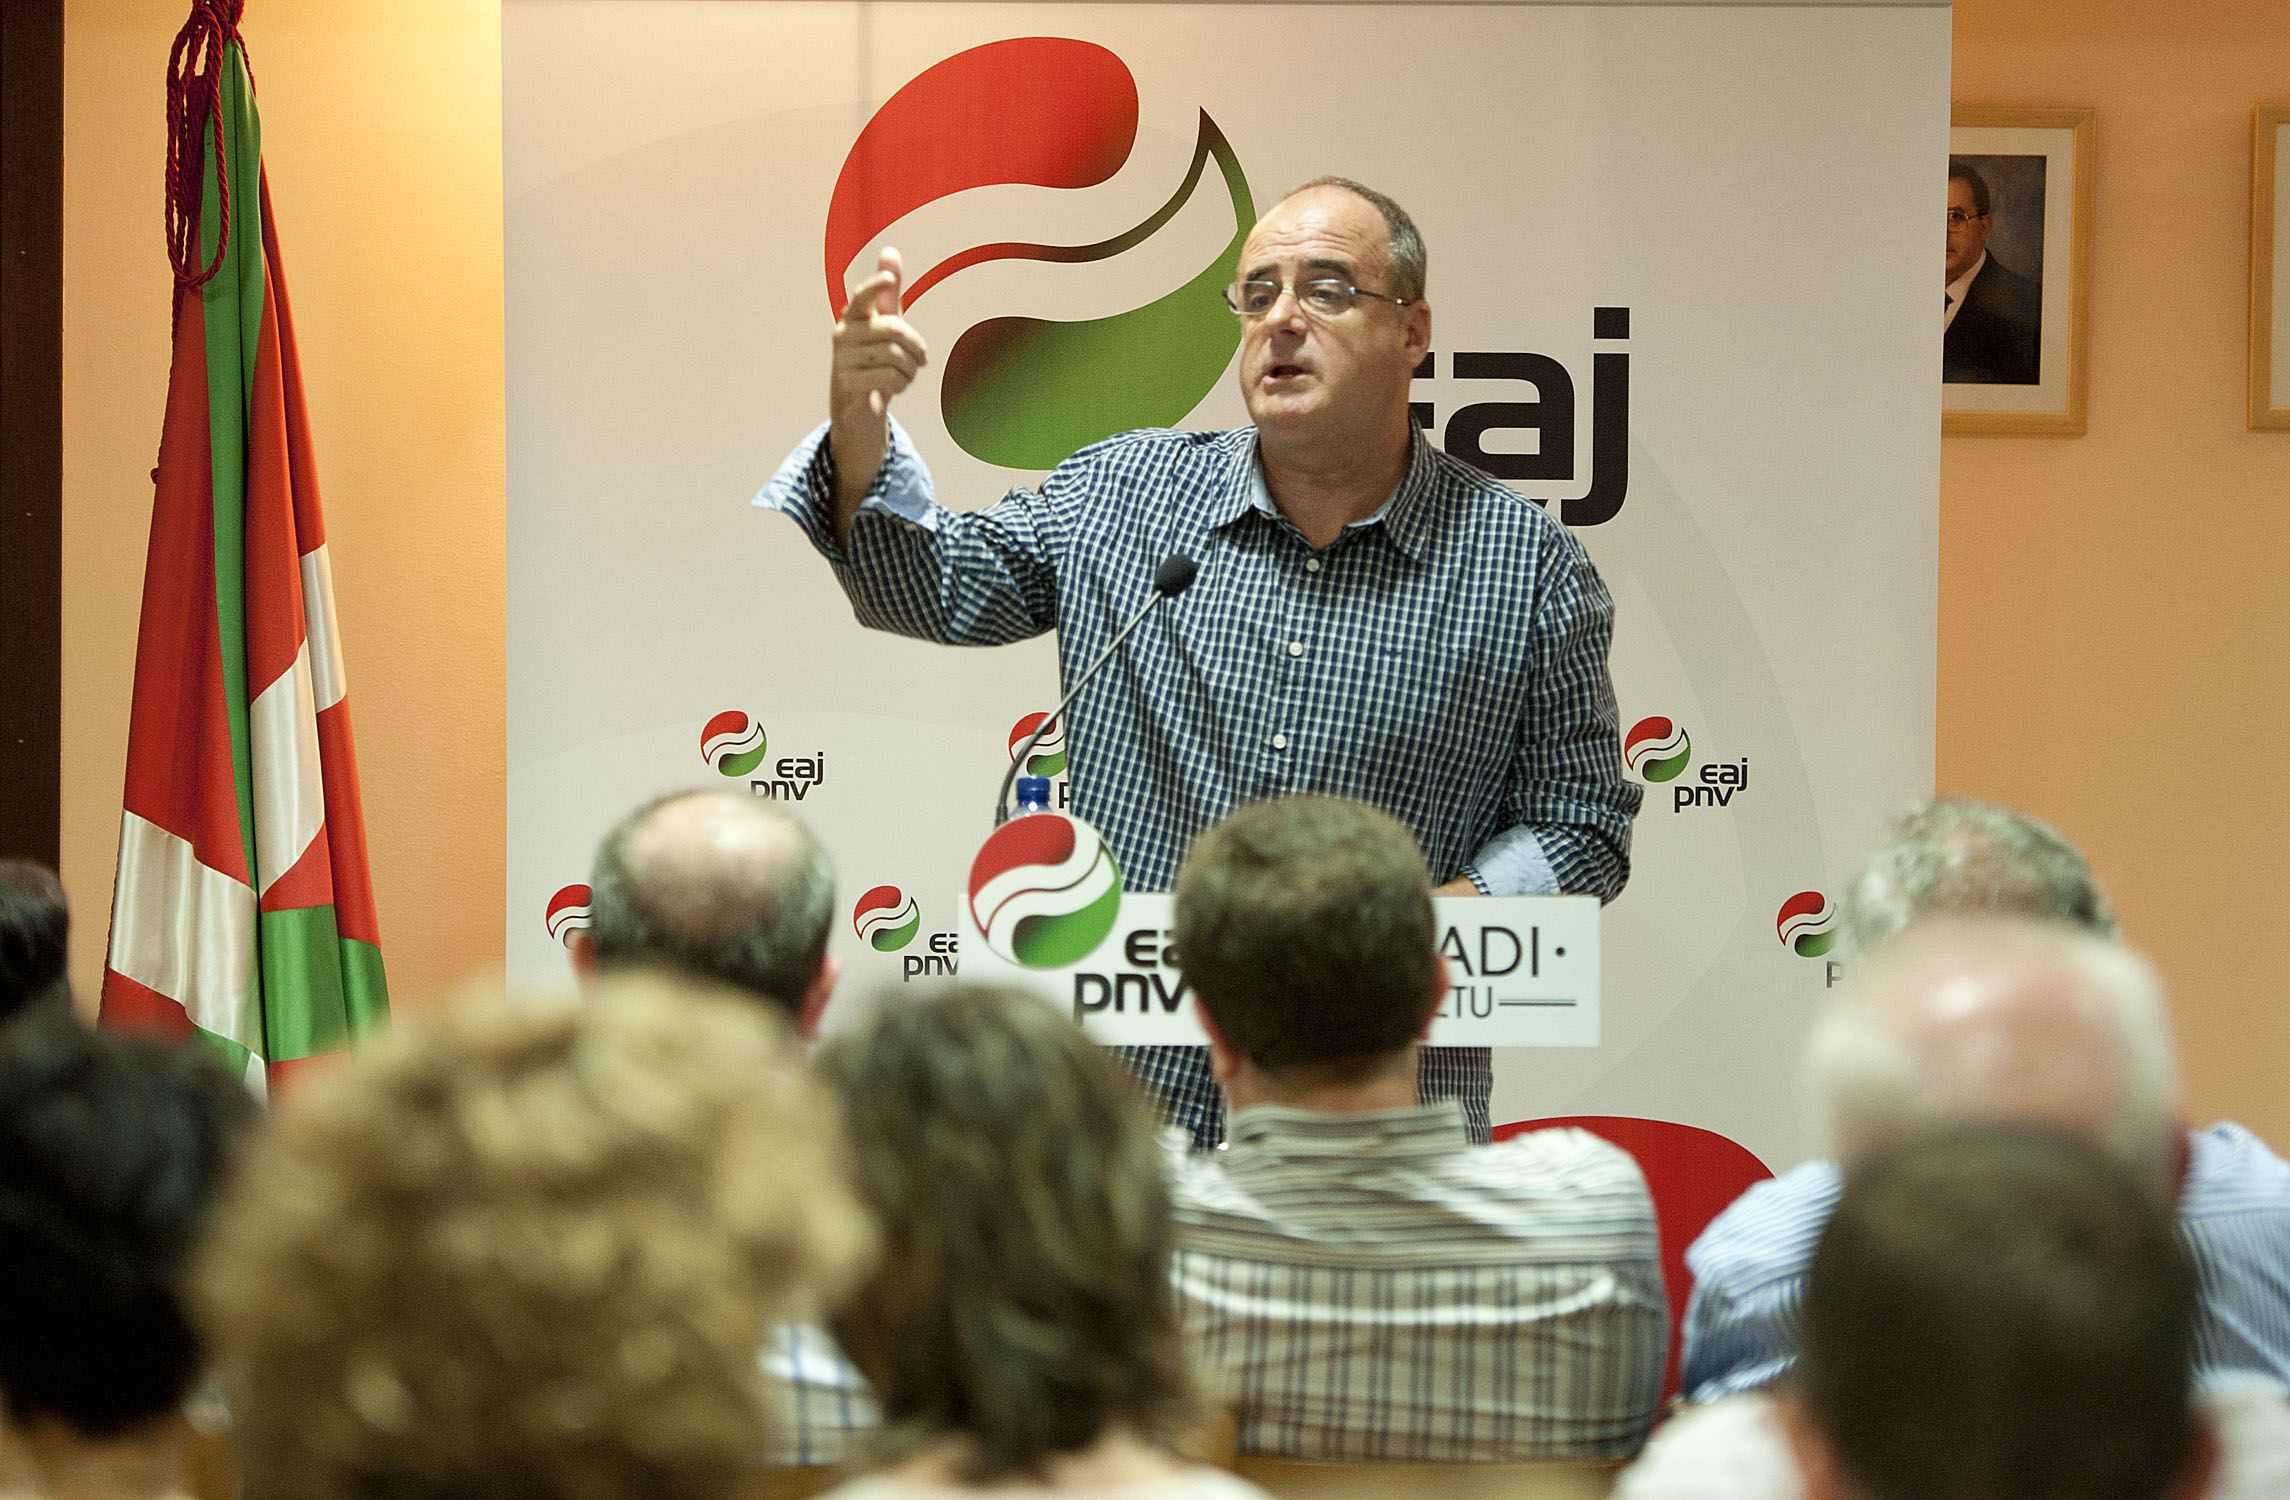 Joseba Egibar, del PNV, apoya el referéndum